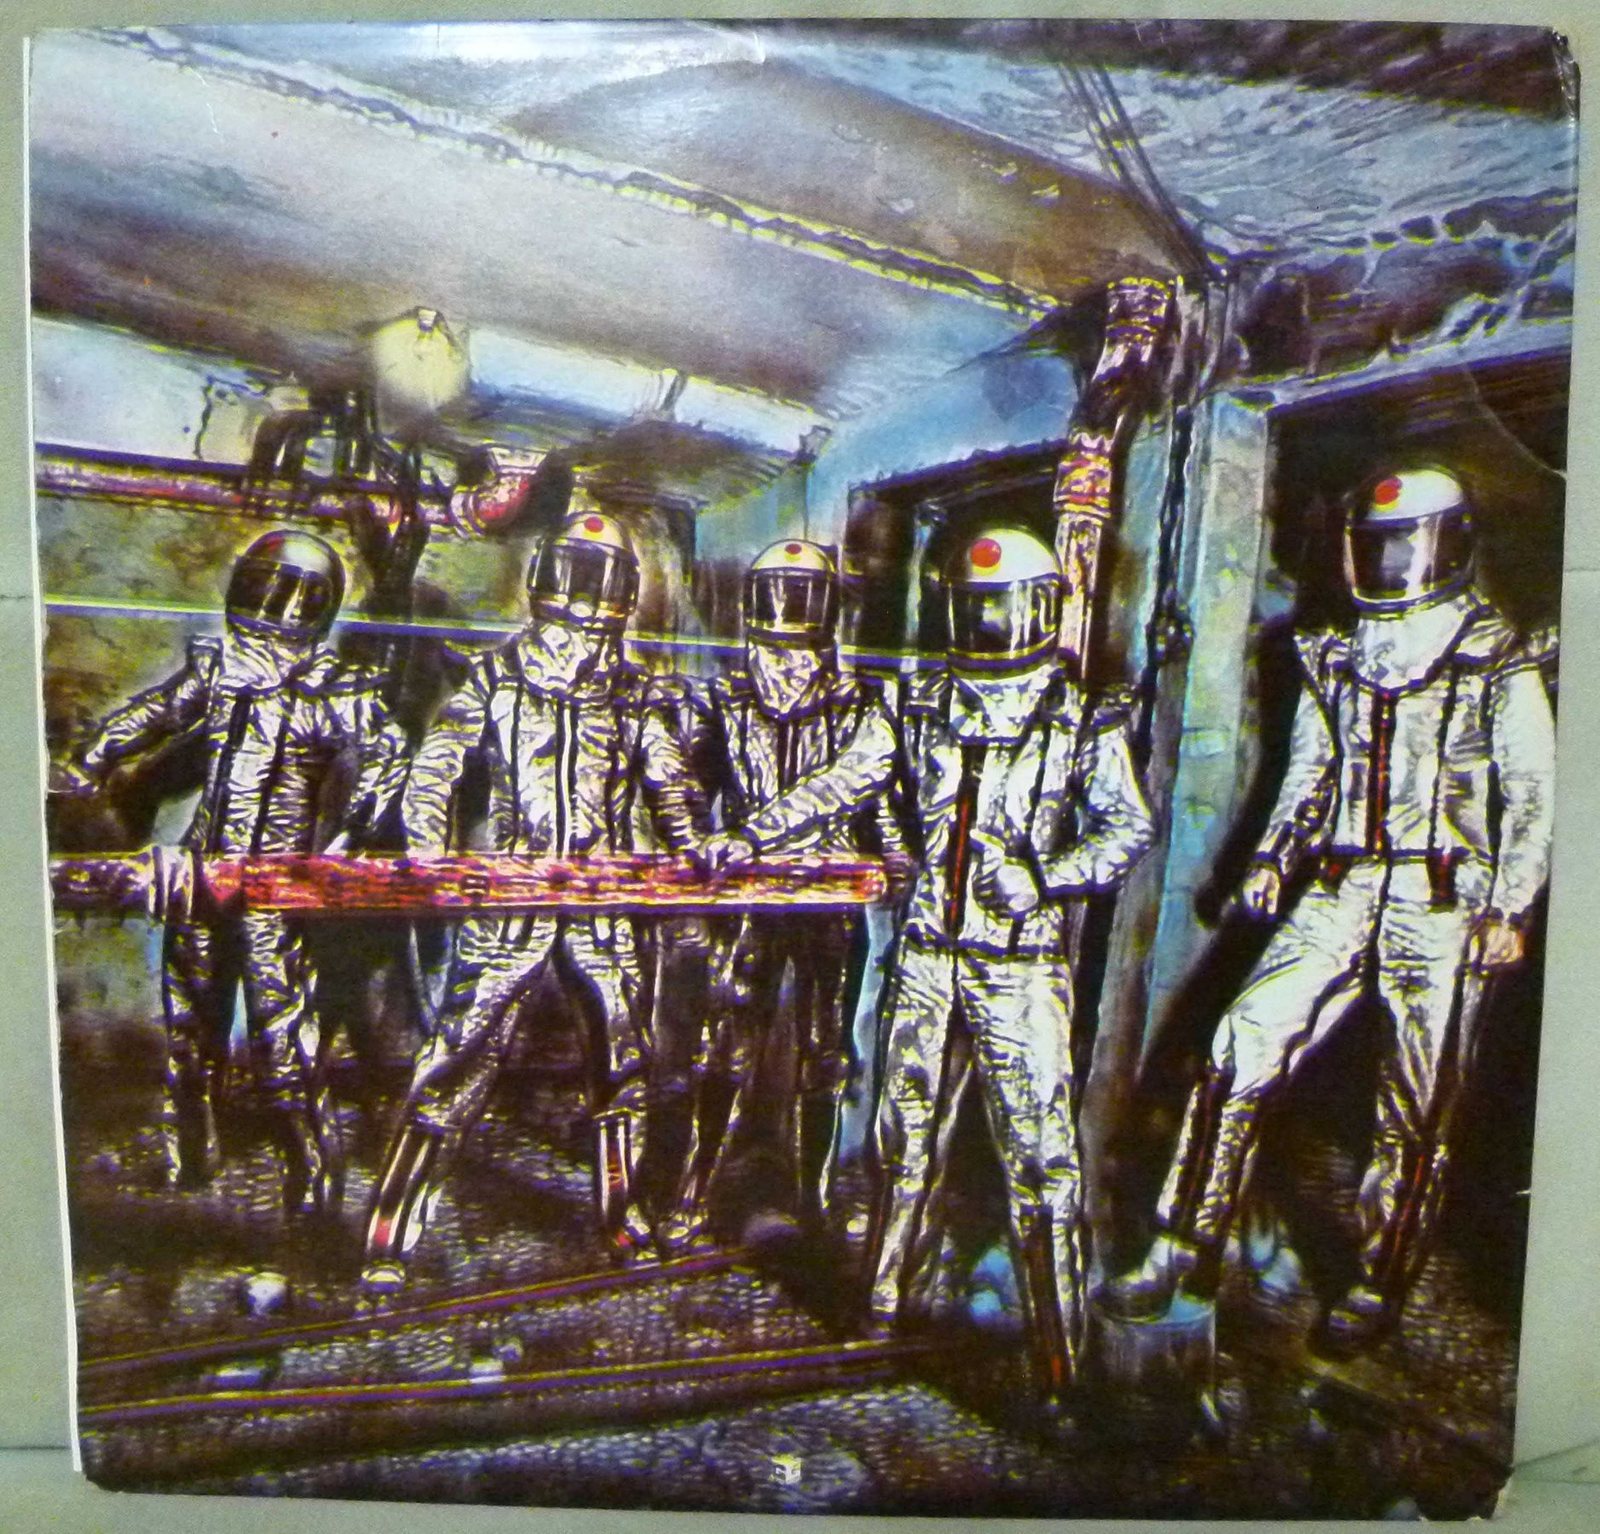 Omega 1979 Kisstadion LP back ааа.jpg